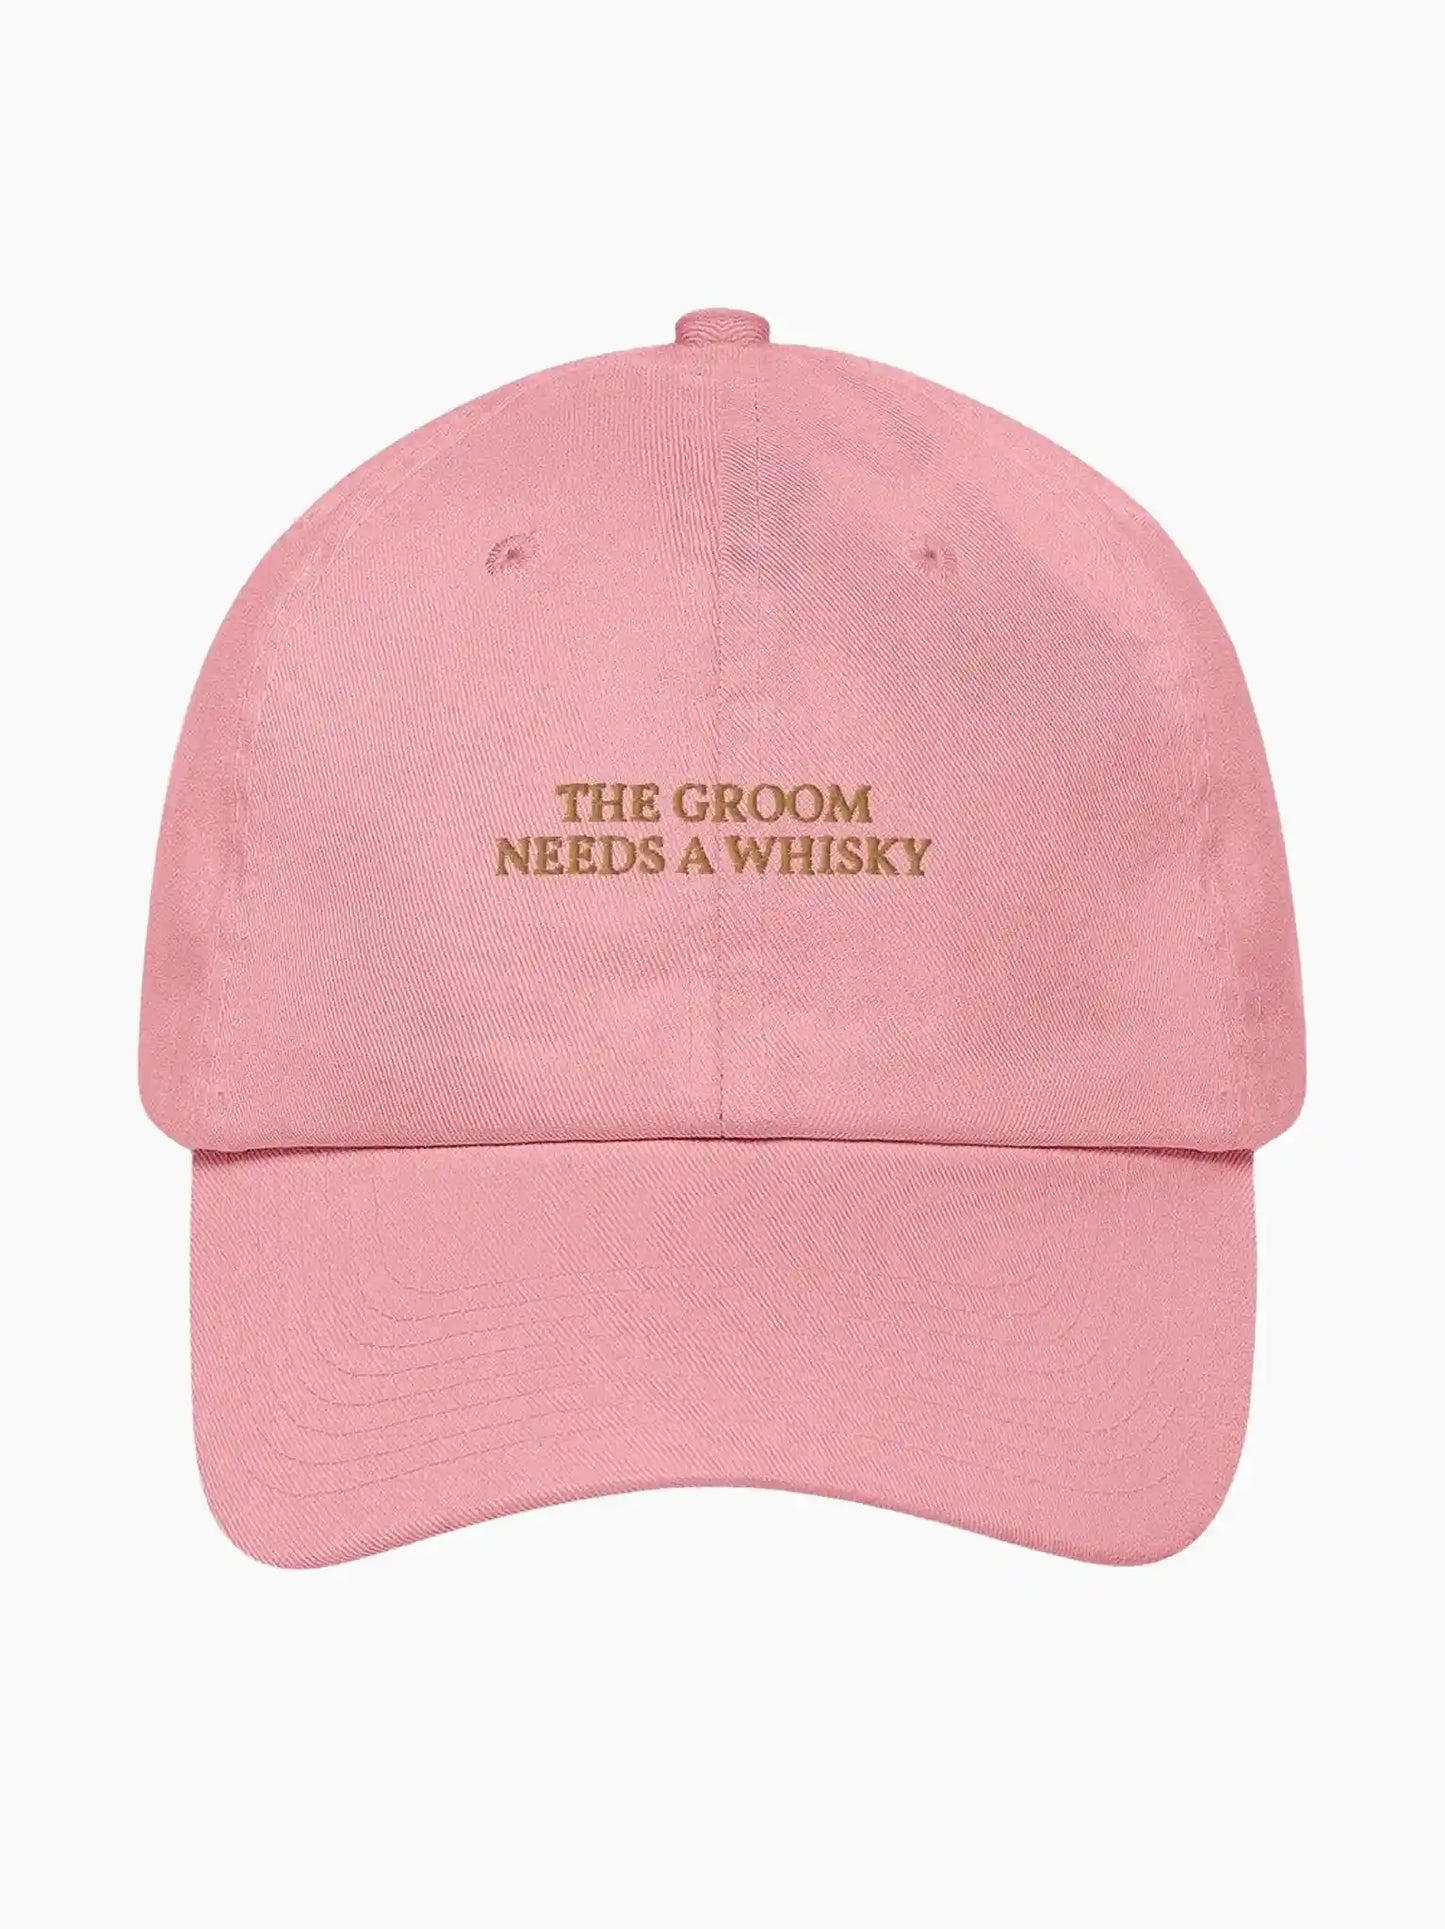 The Groom Needs A Drink Cap